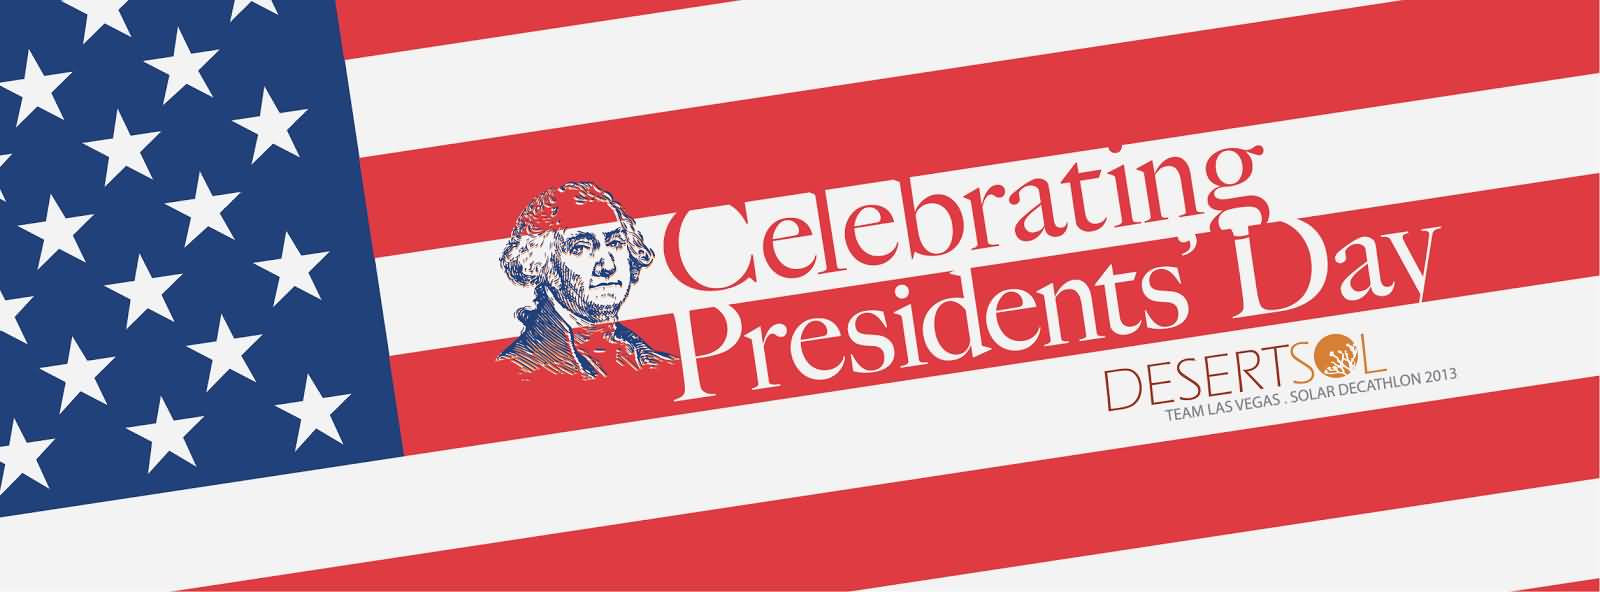 Celebrating Presidents Day Facebook Cover Photo